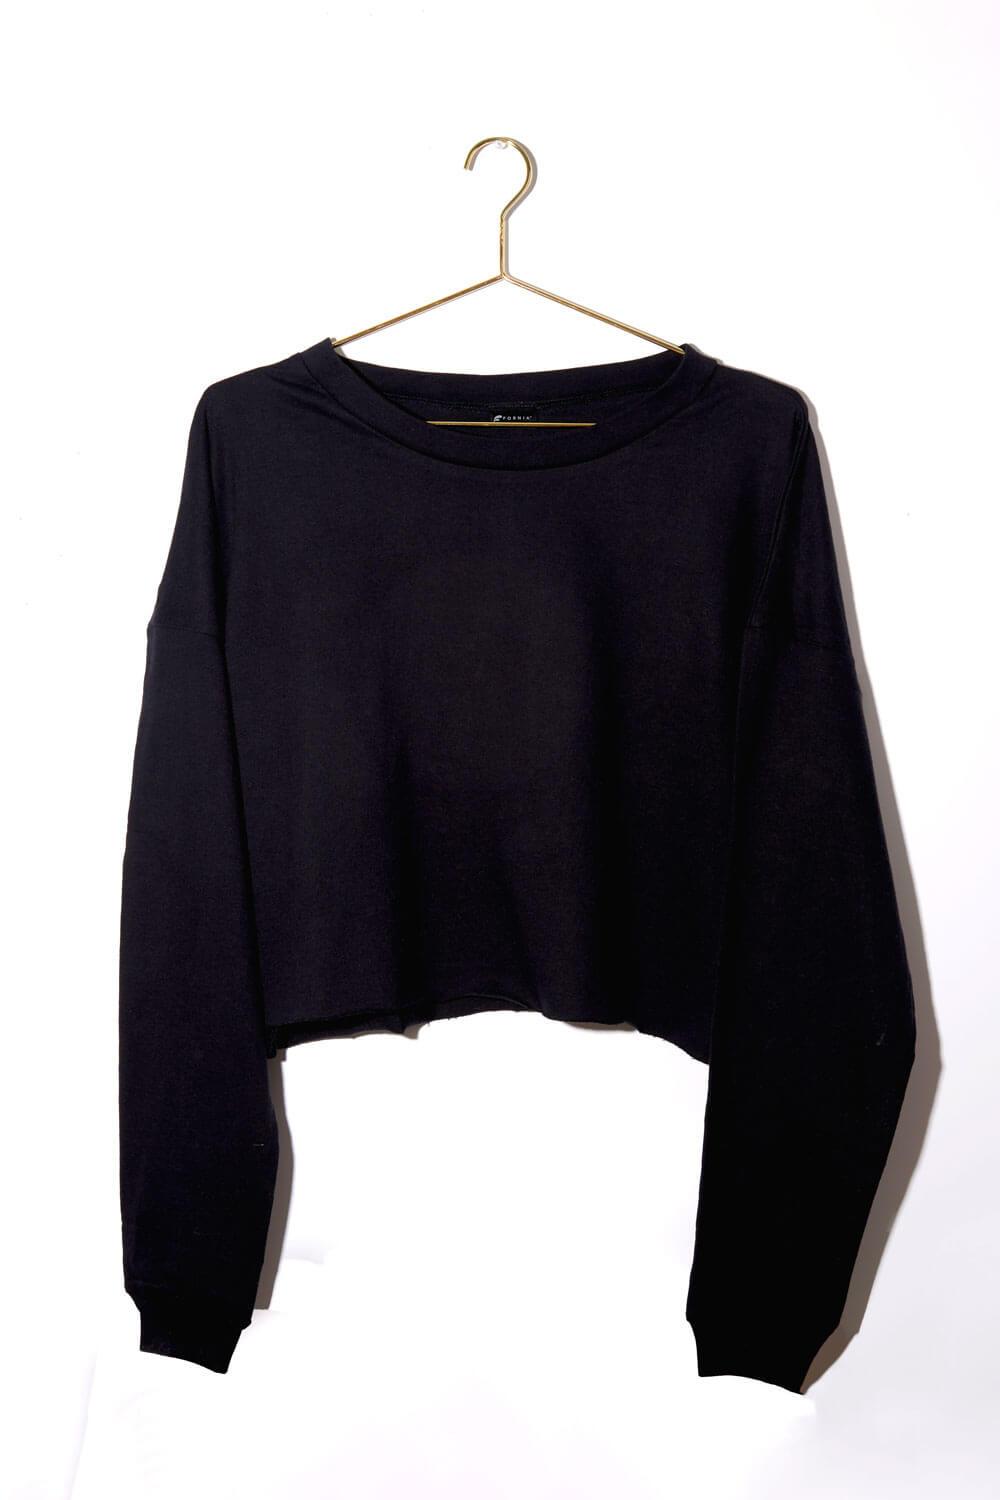 Soho Cropped Sweatshirt black front MILK MONEY